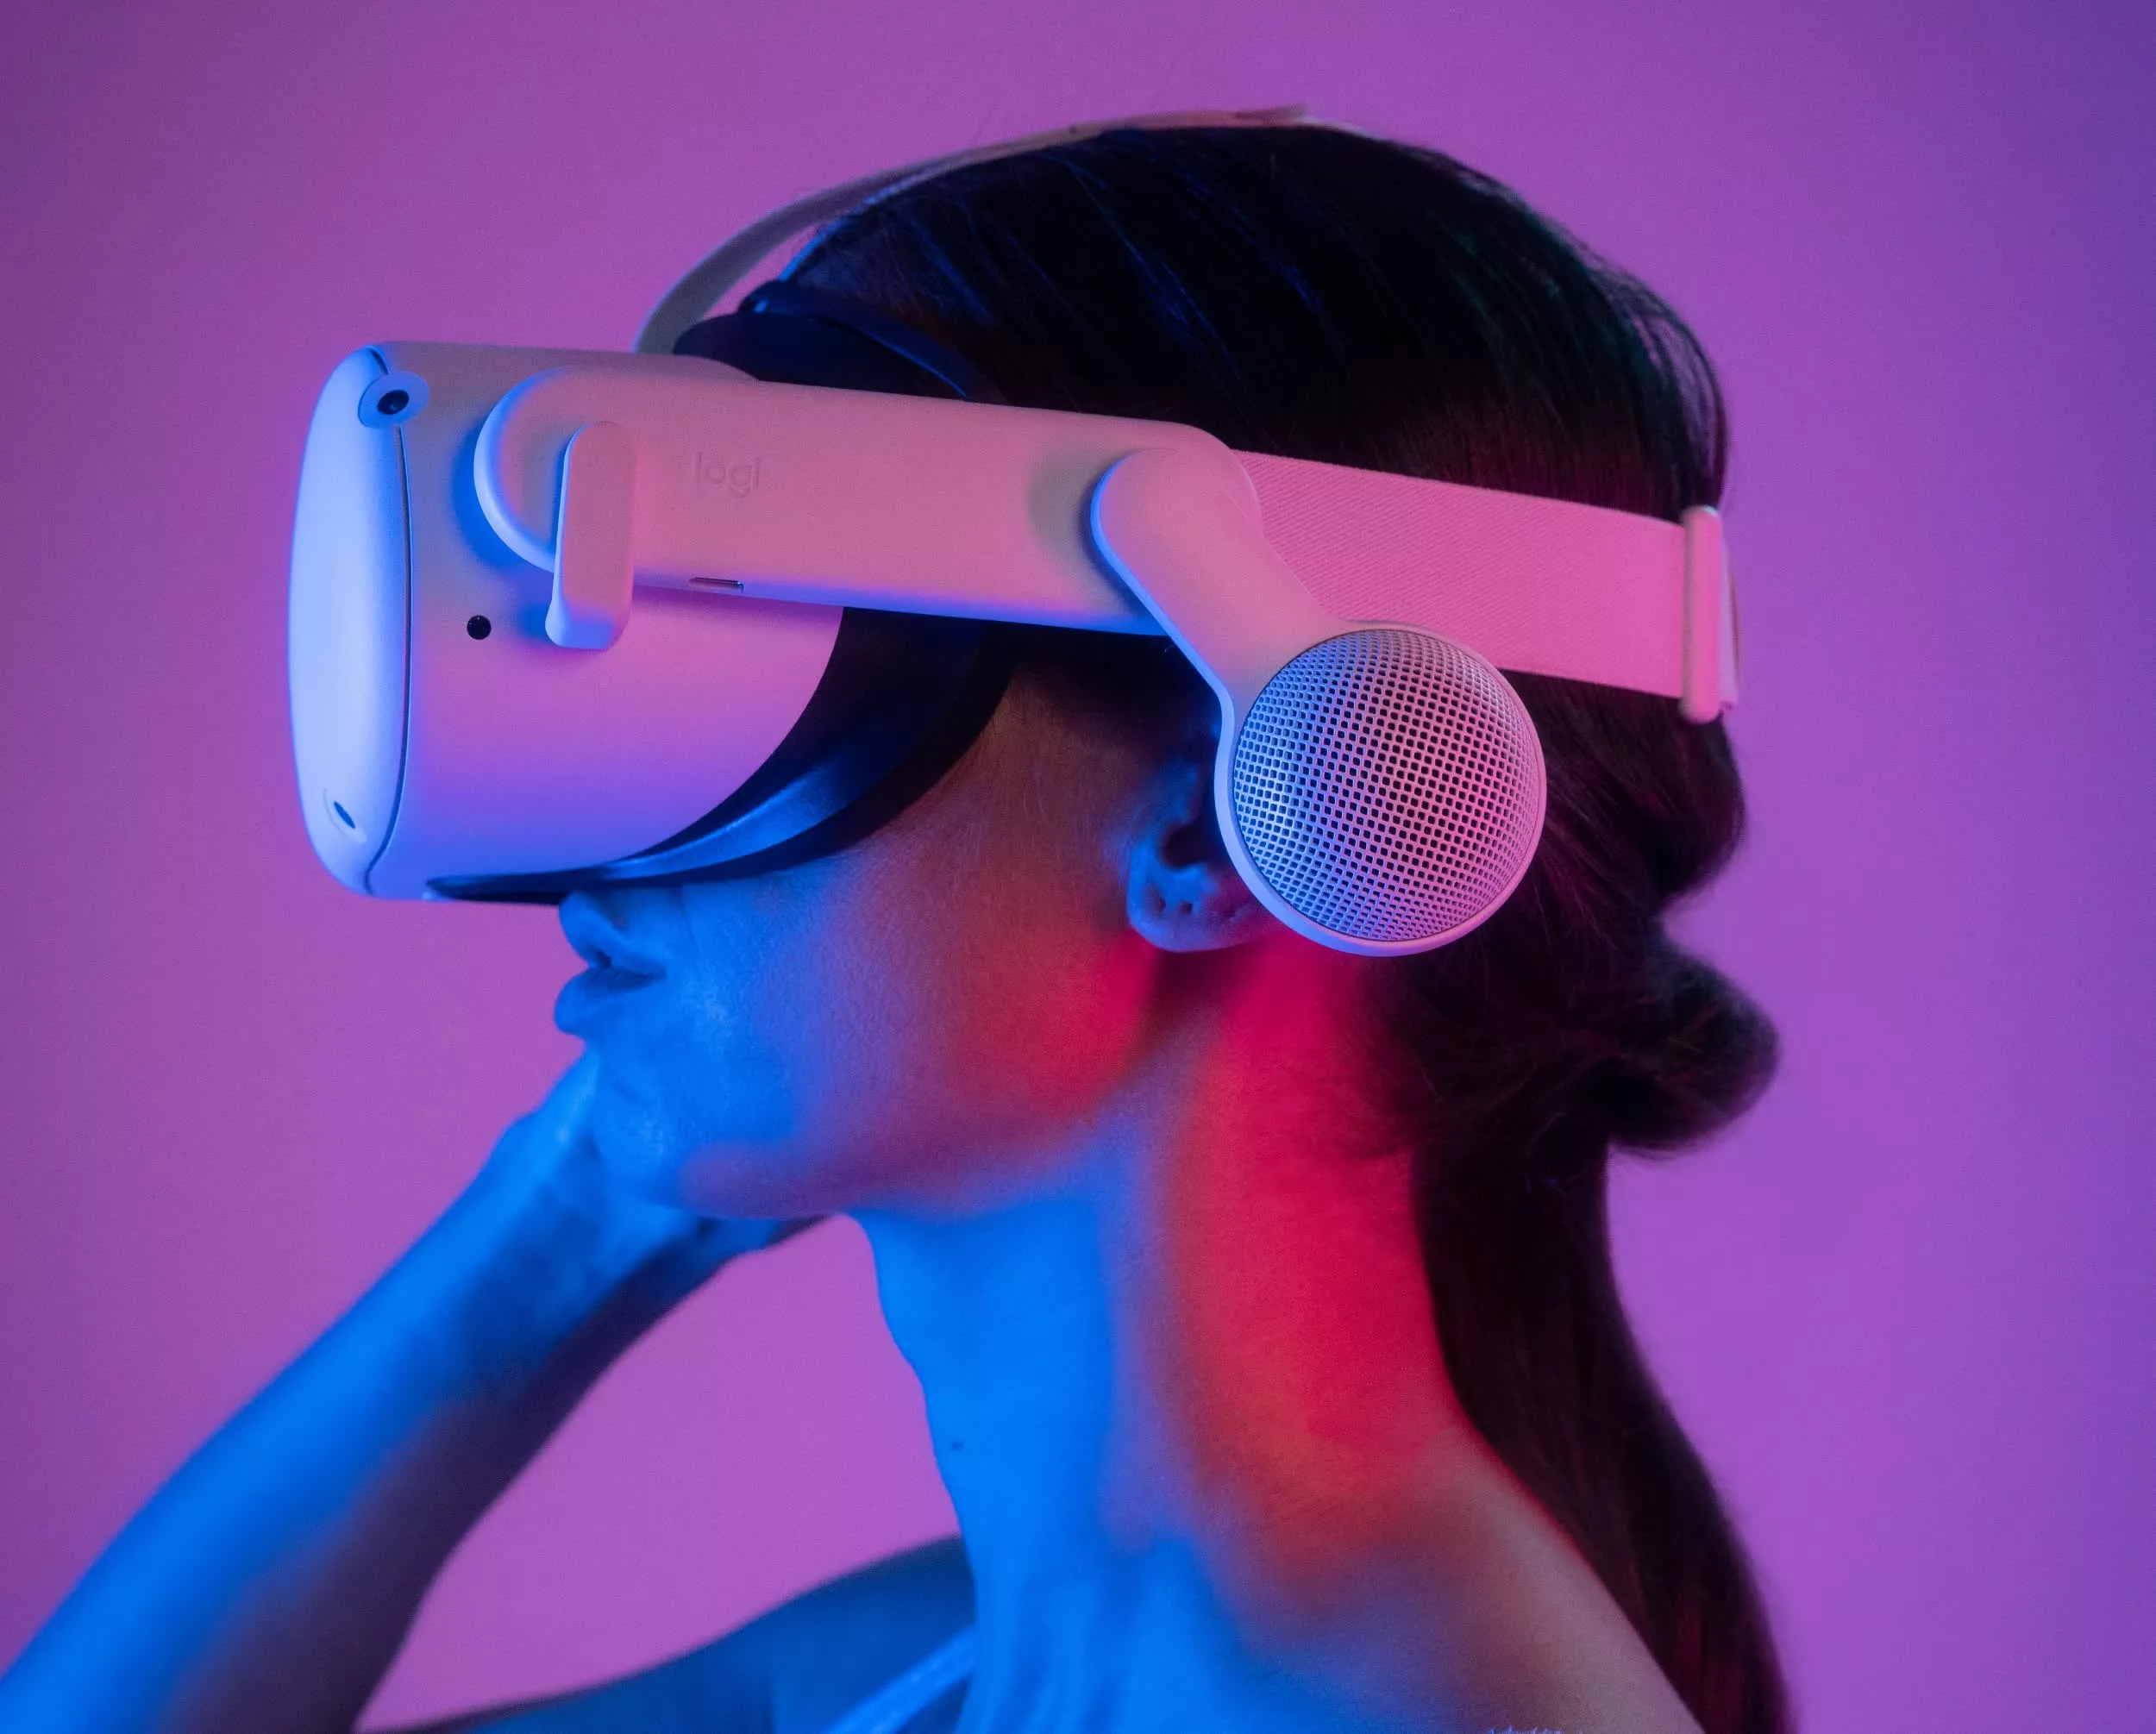 Logitech announces $100 speaker add-on for the Meta Quest 2 VR headset